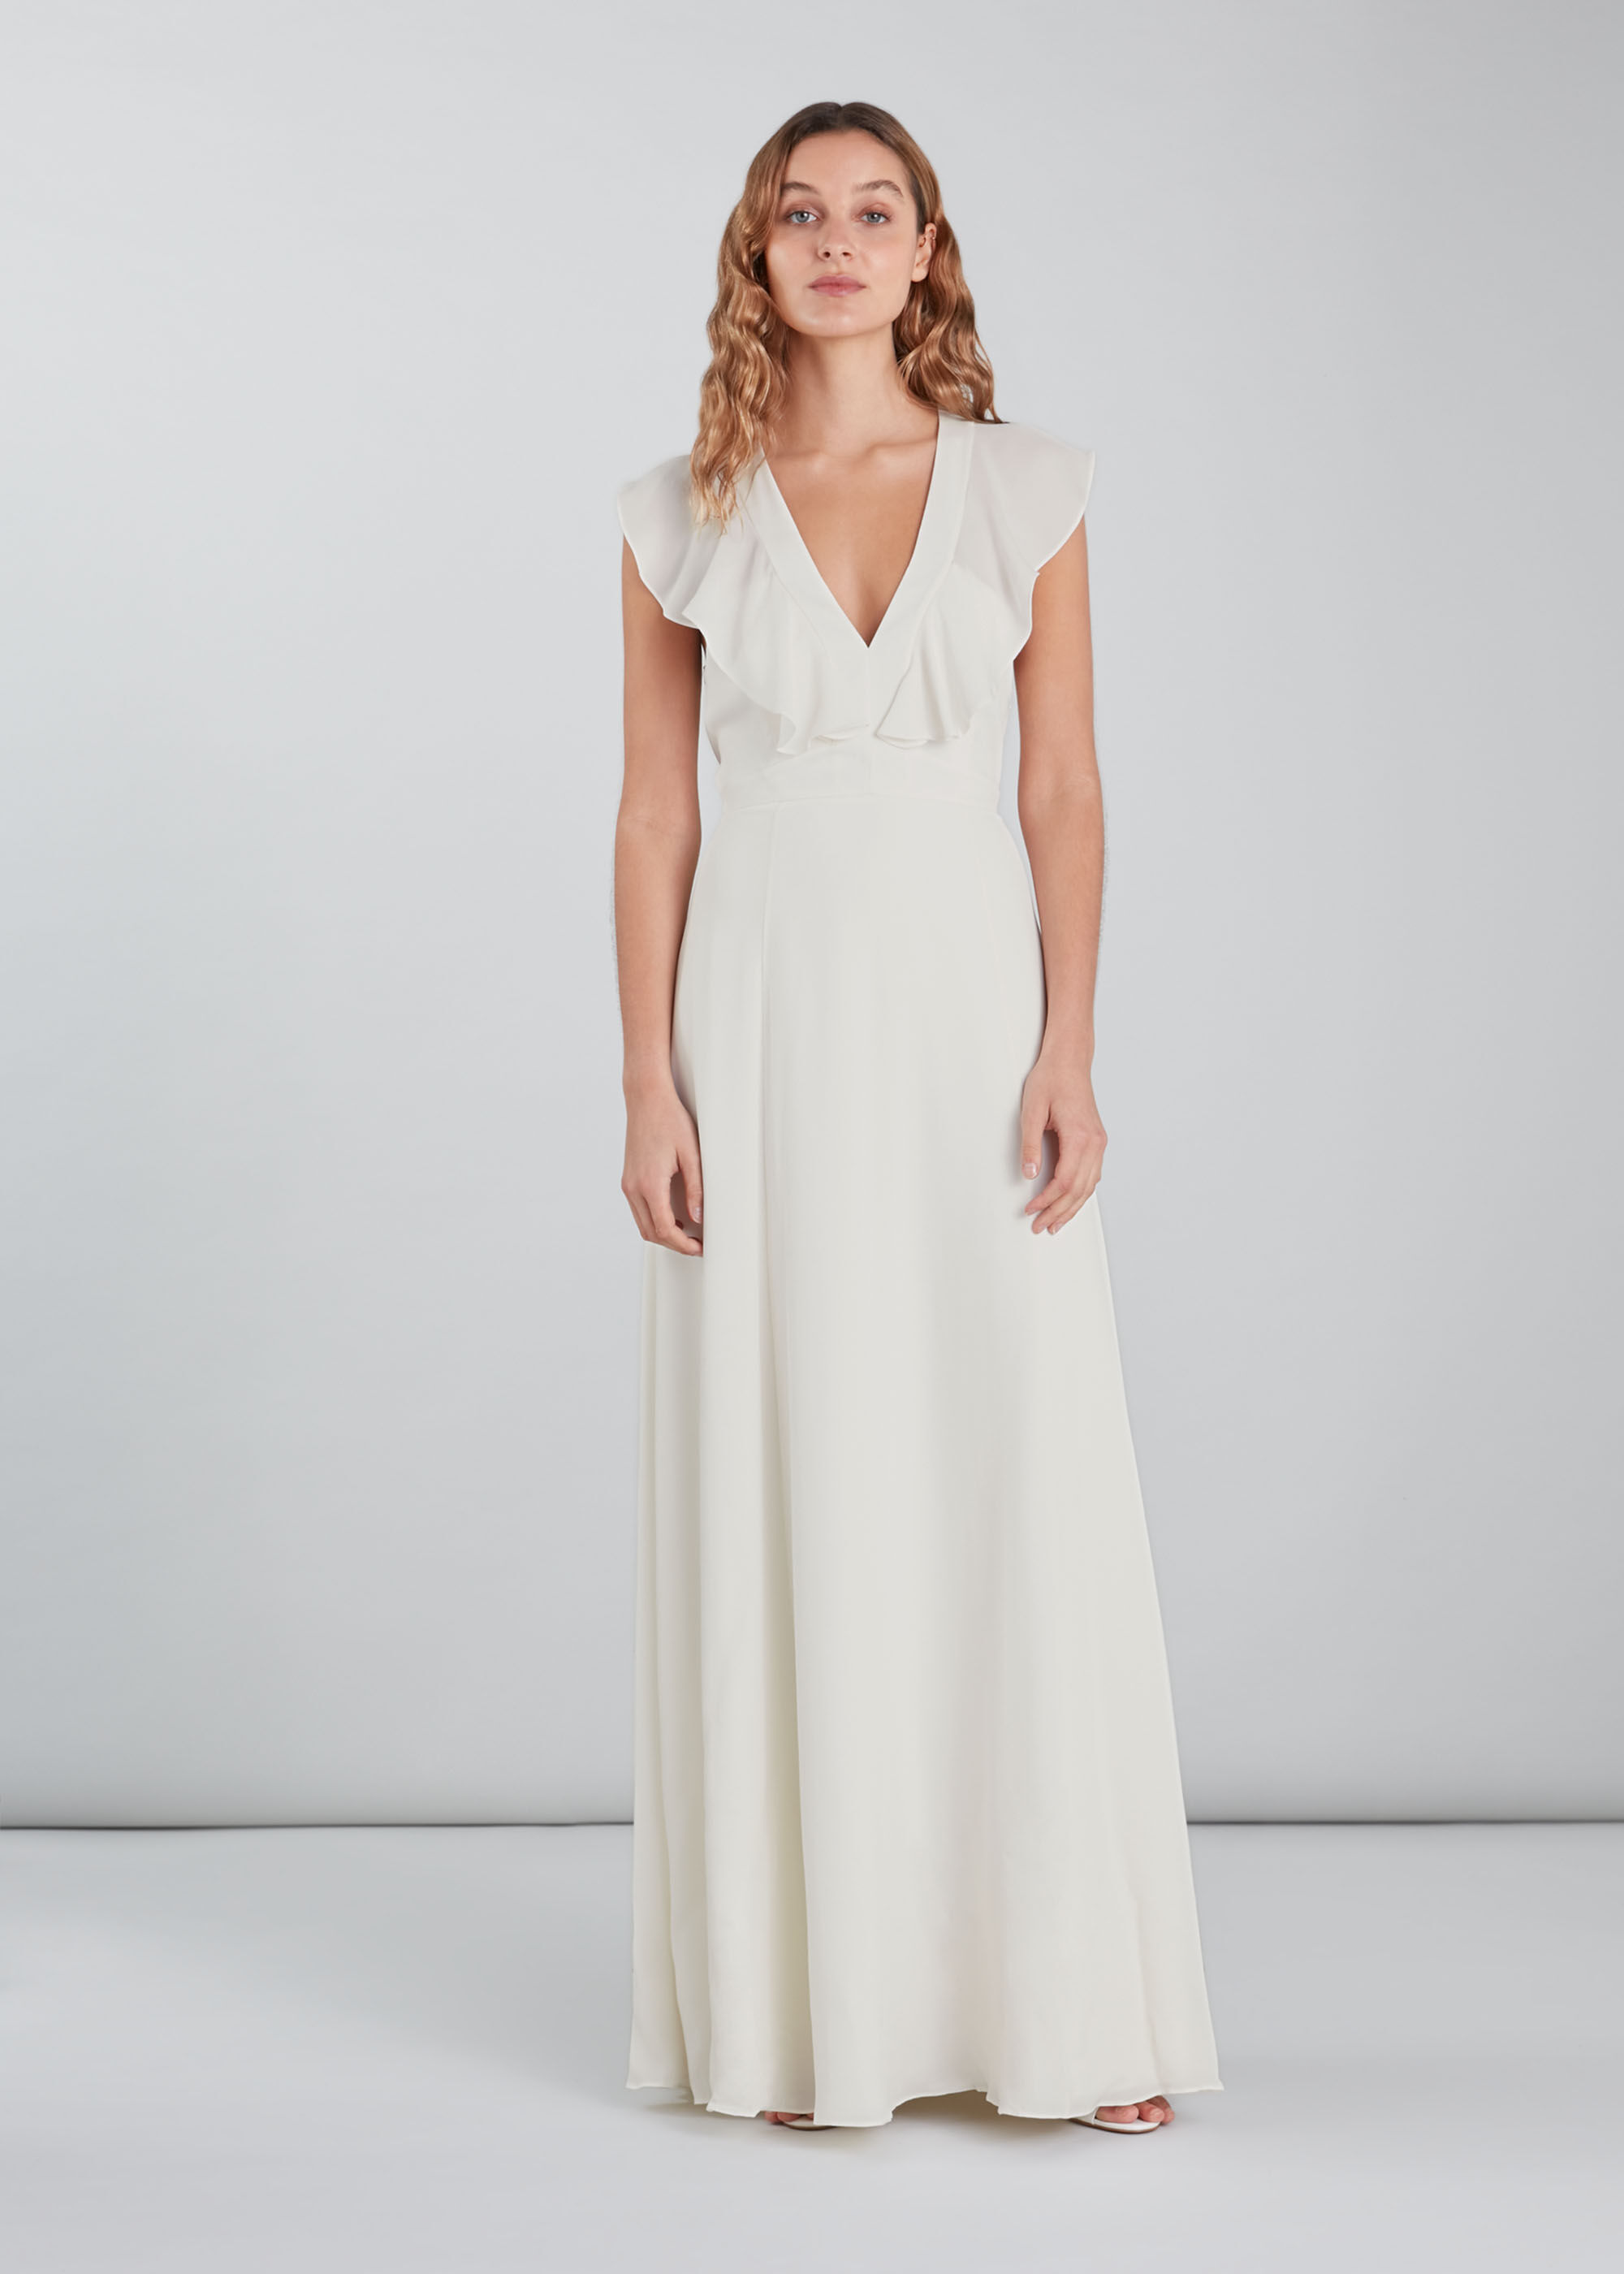 Eve of Milady Couture 2021 Wedding Dresses  Wedding Inspirasi